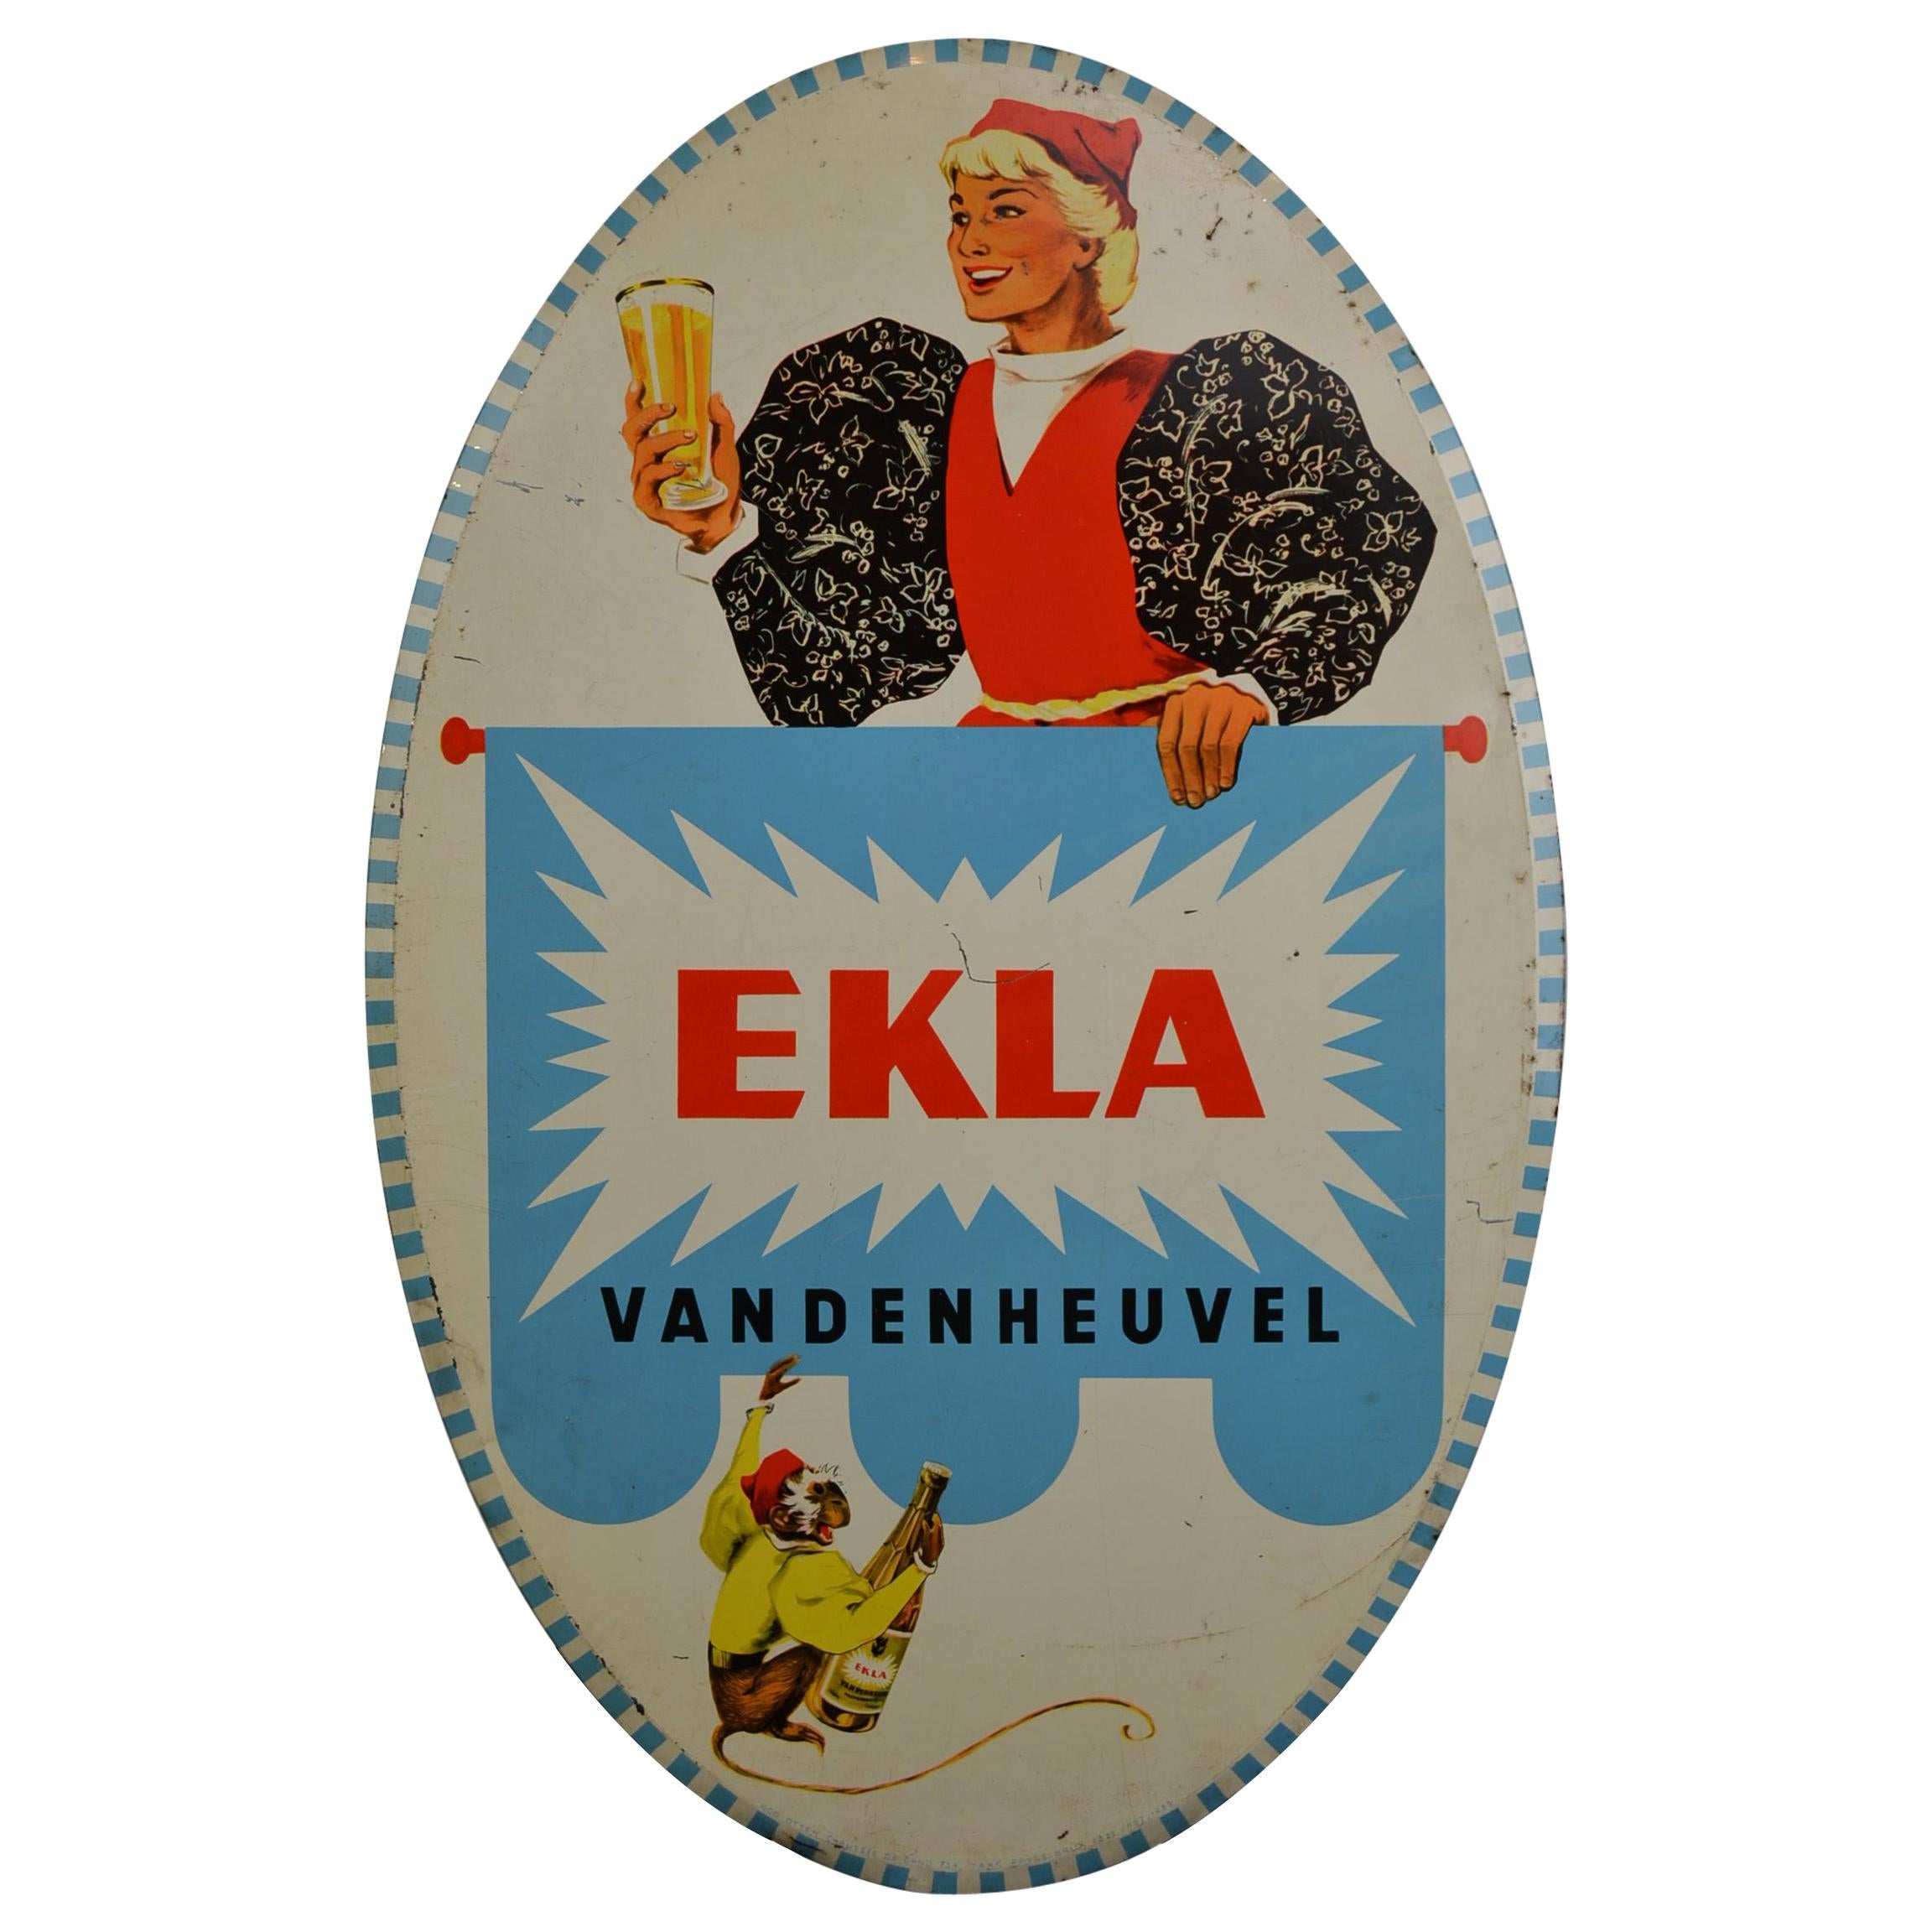 1950s Tin Advertising Beer Sign for Belgian Beer Ekla, Brewery Vandenheuvel